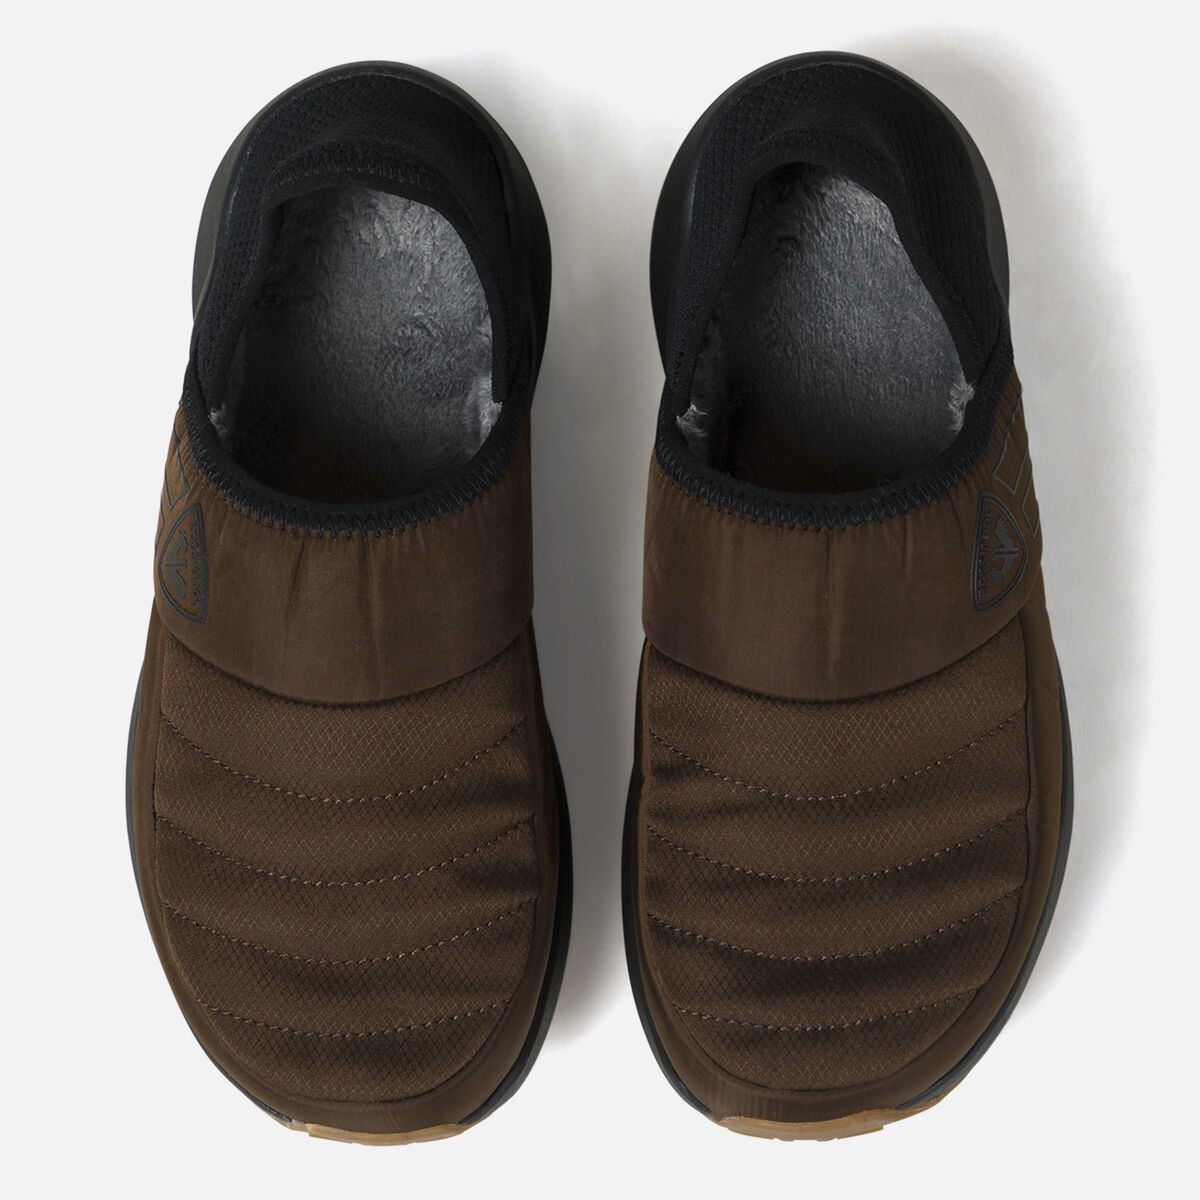 Pantofole invernali uomo Chalet 2.0 marroni